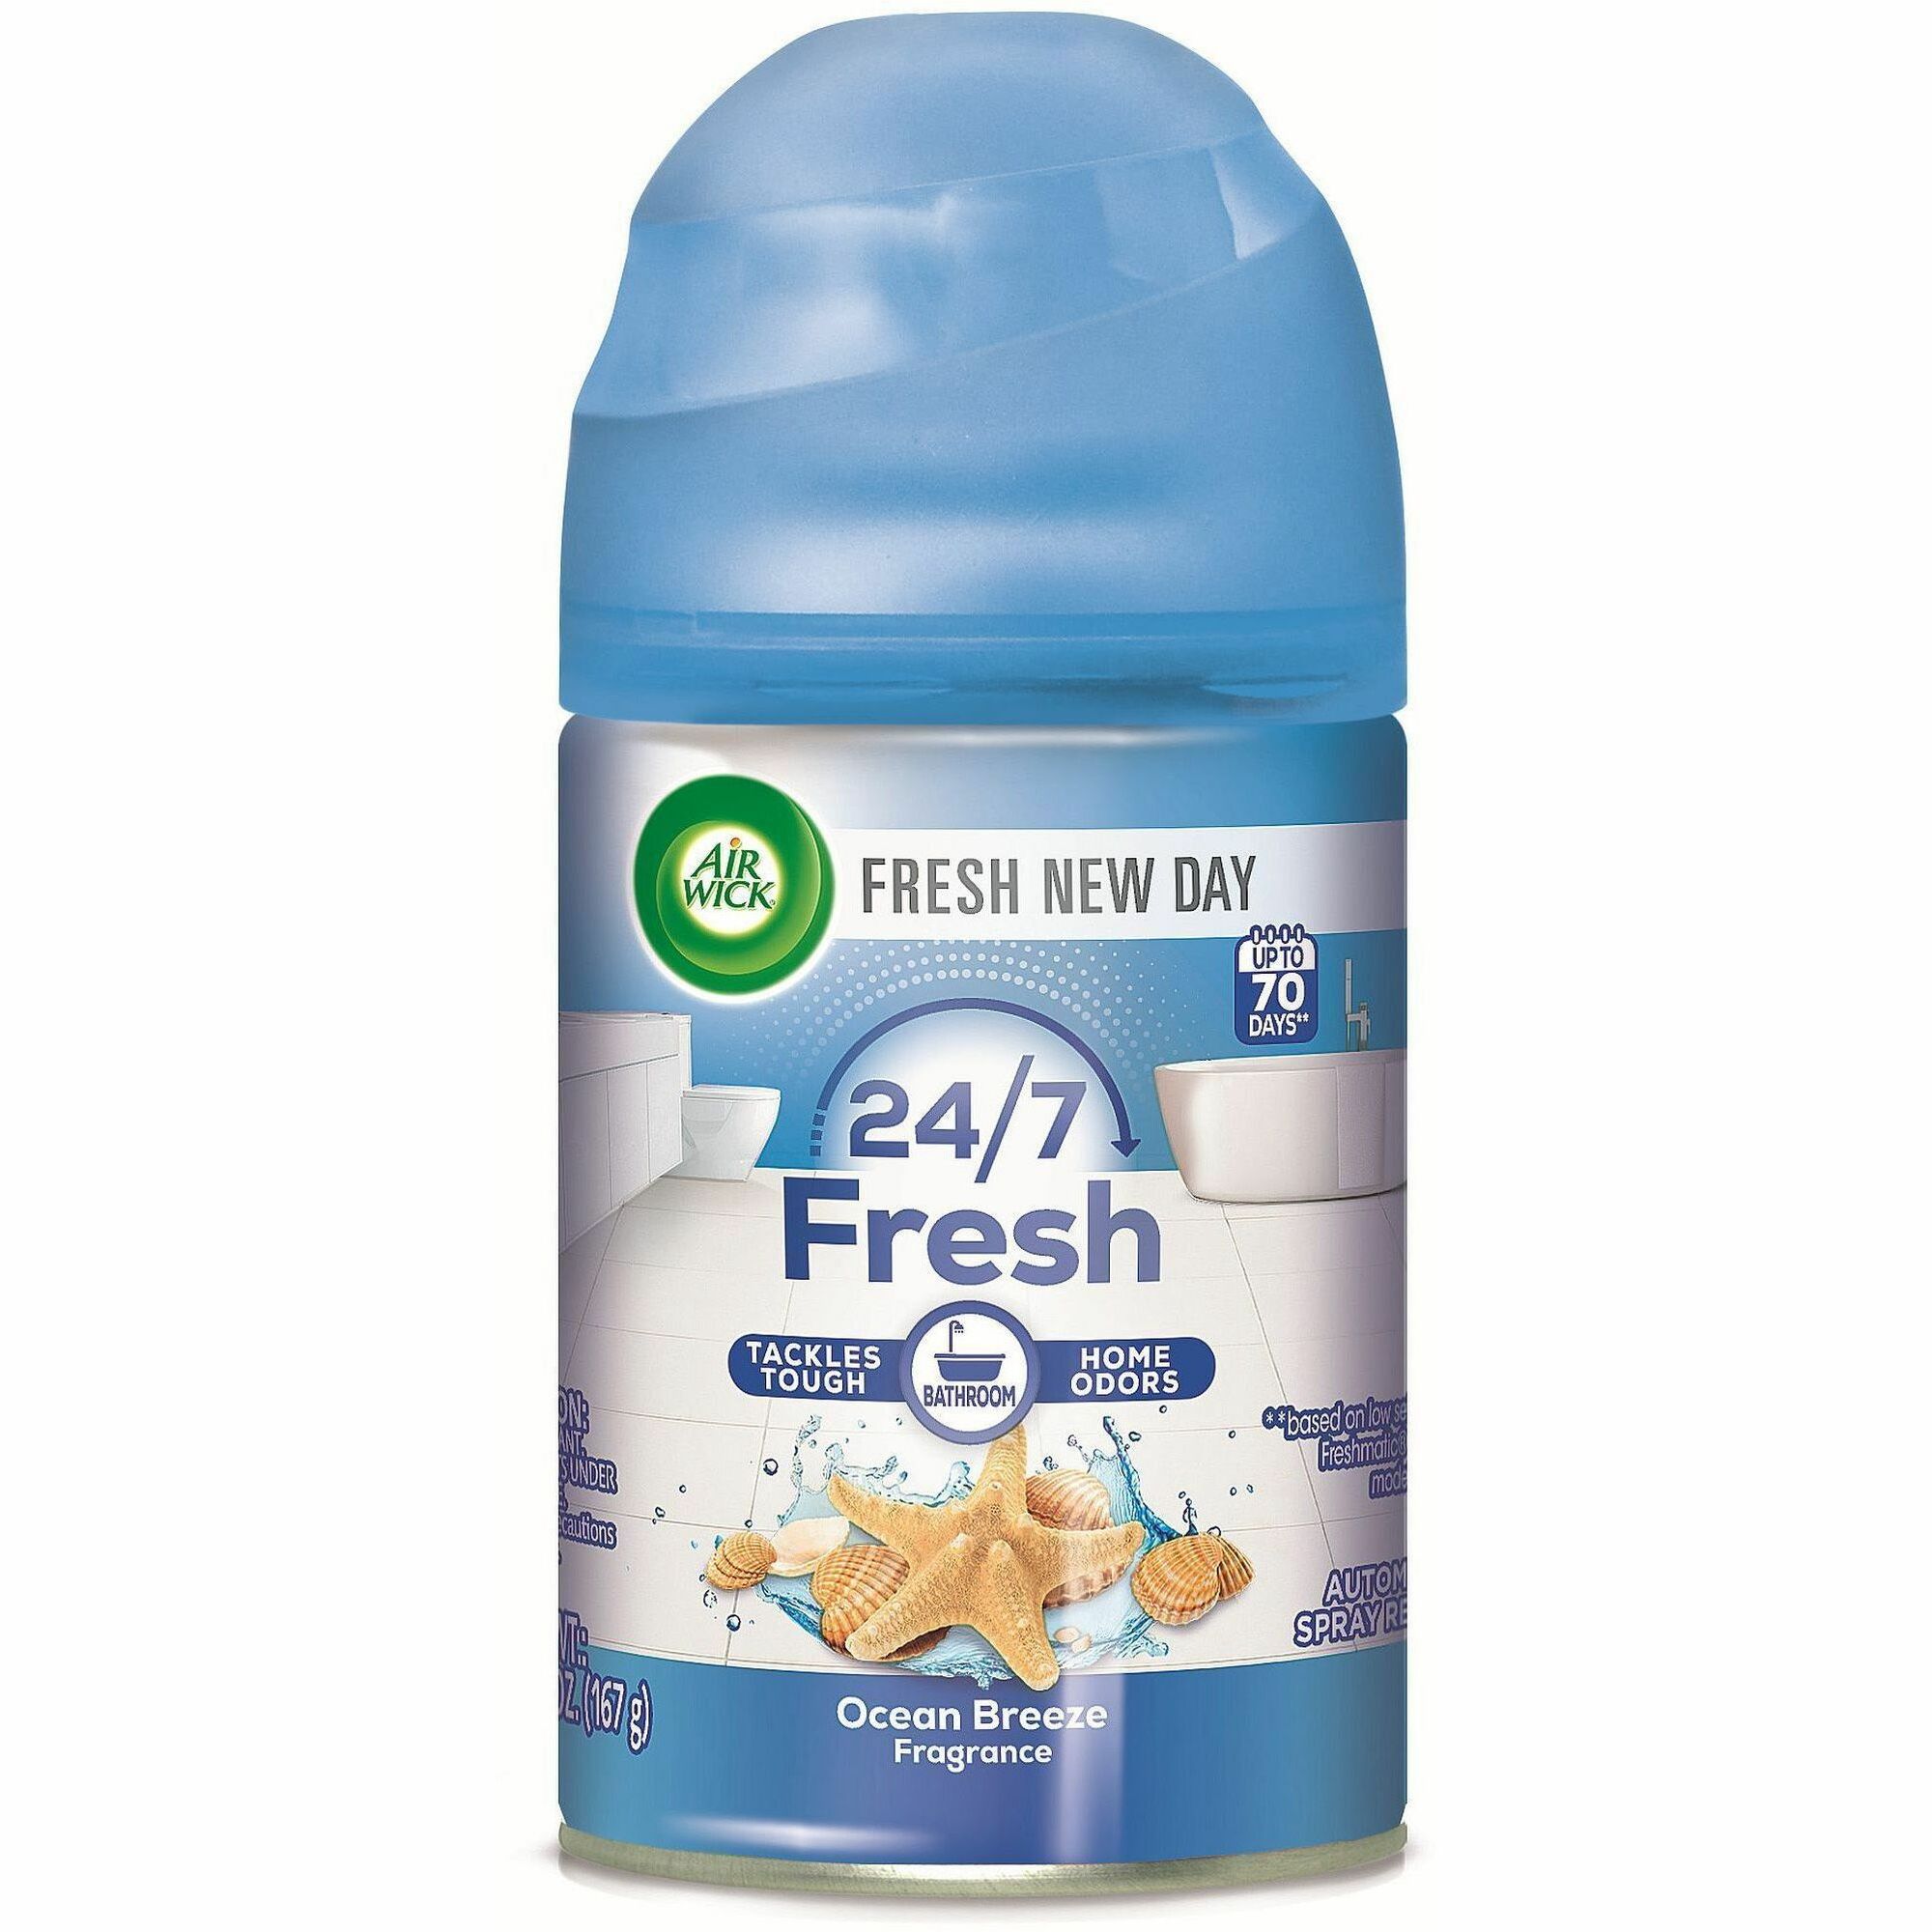 Air Wick Vanilla Freshmatic Automatic Air Freshener Refill, Summer Delights  -250 ml | 2600 Sprays Guaranteed | Automatic Room Freshener, Bathroom